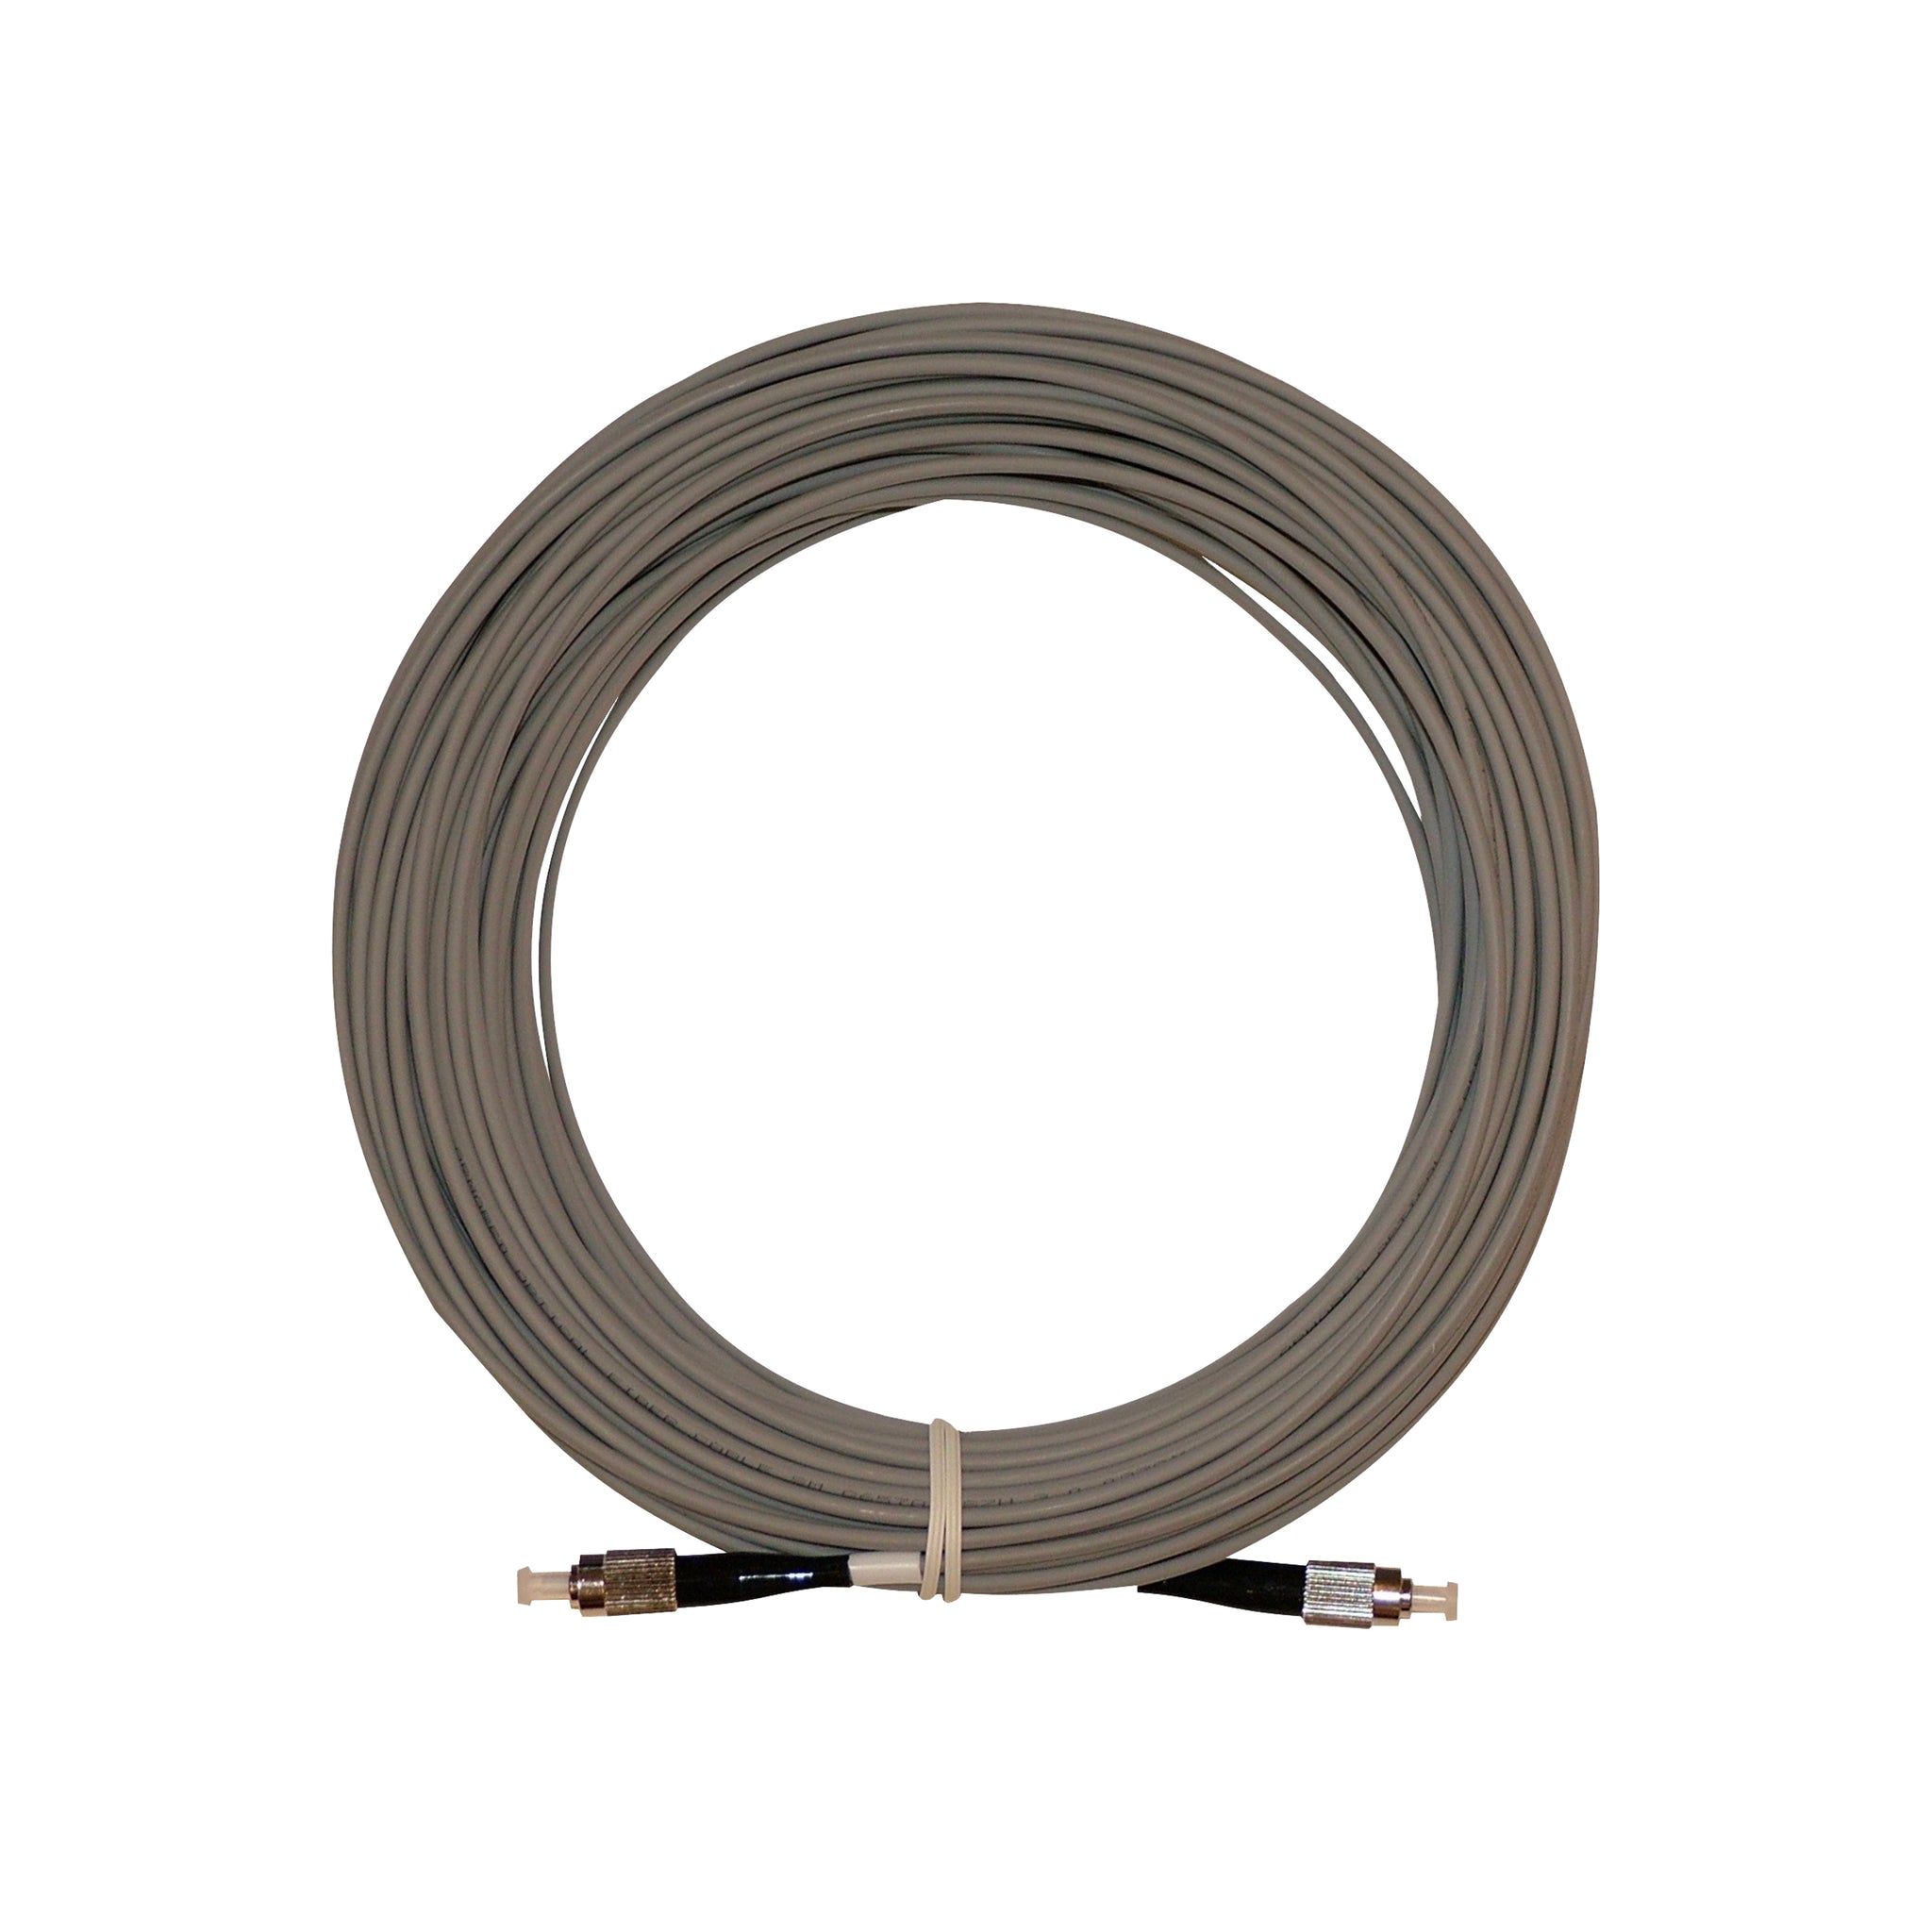 20m FC/PC Pre-Terminated Fibre Optic Cable